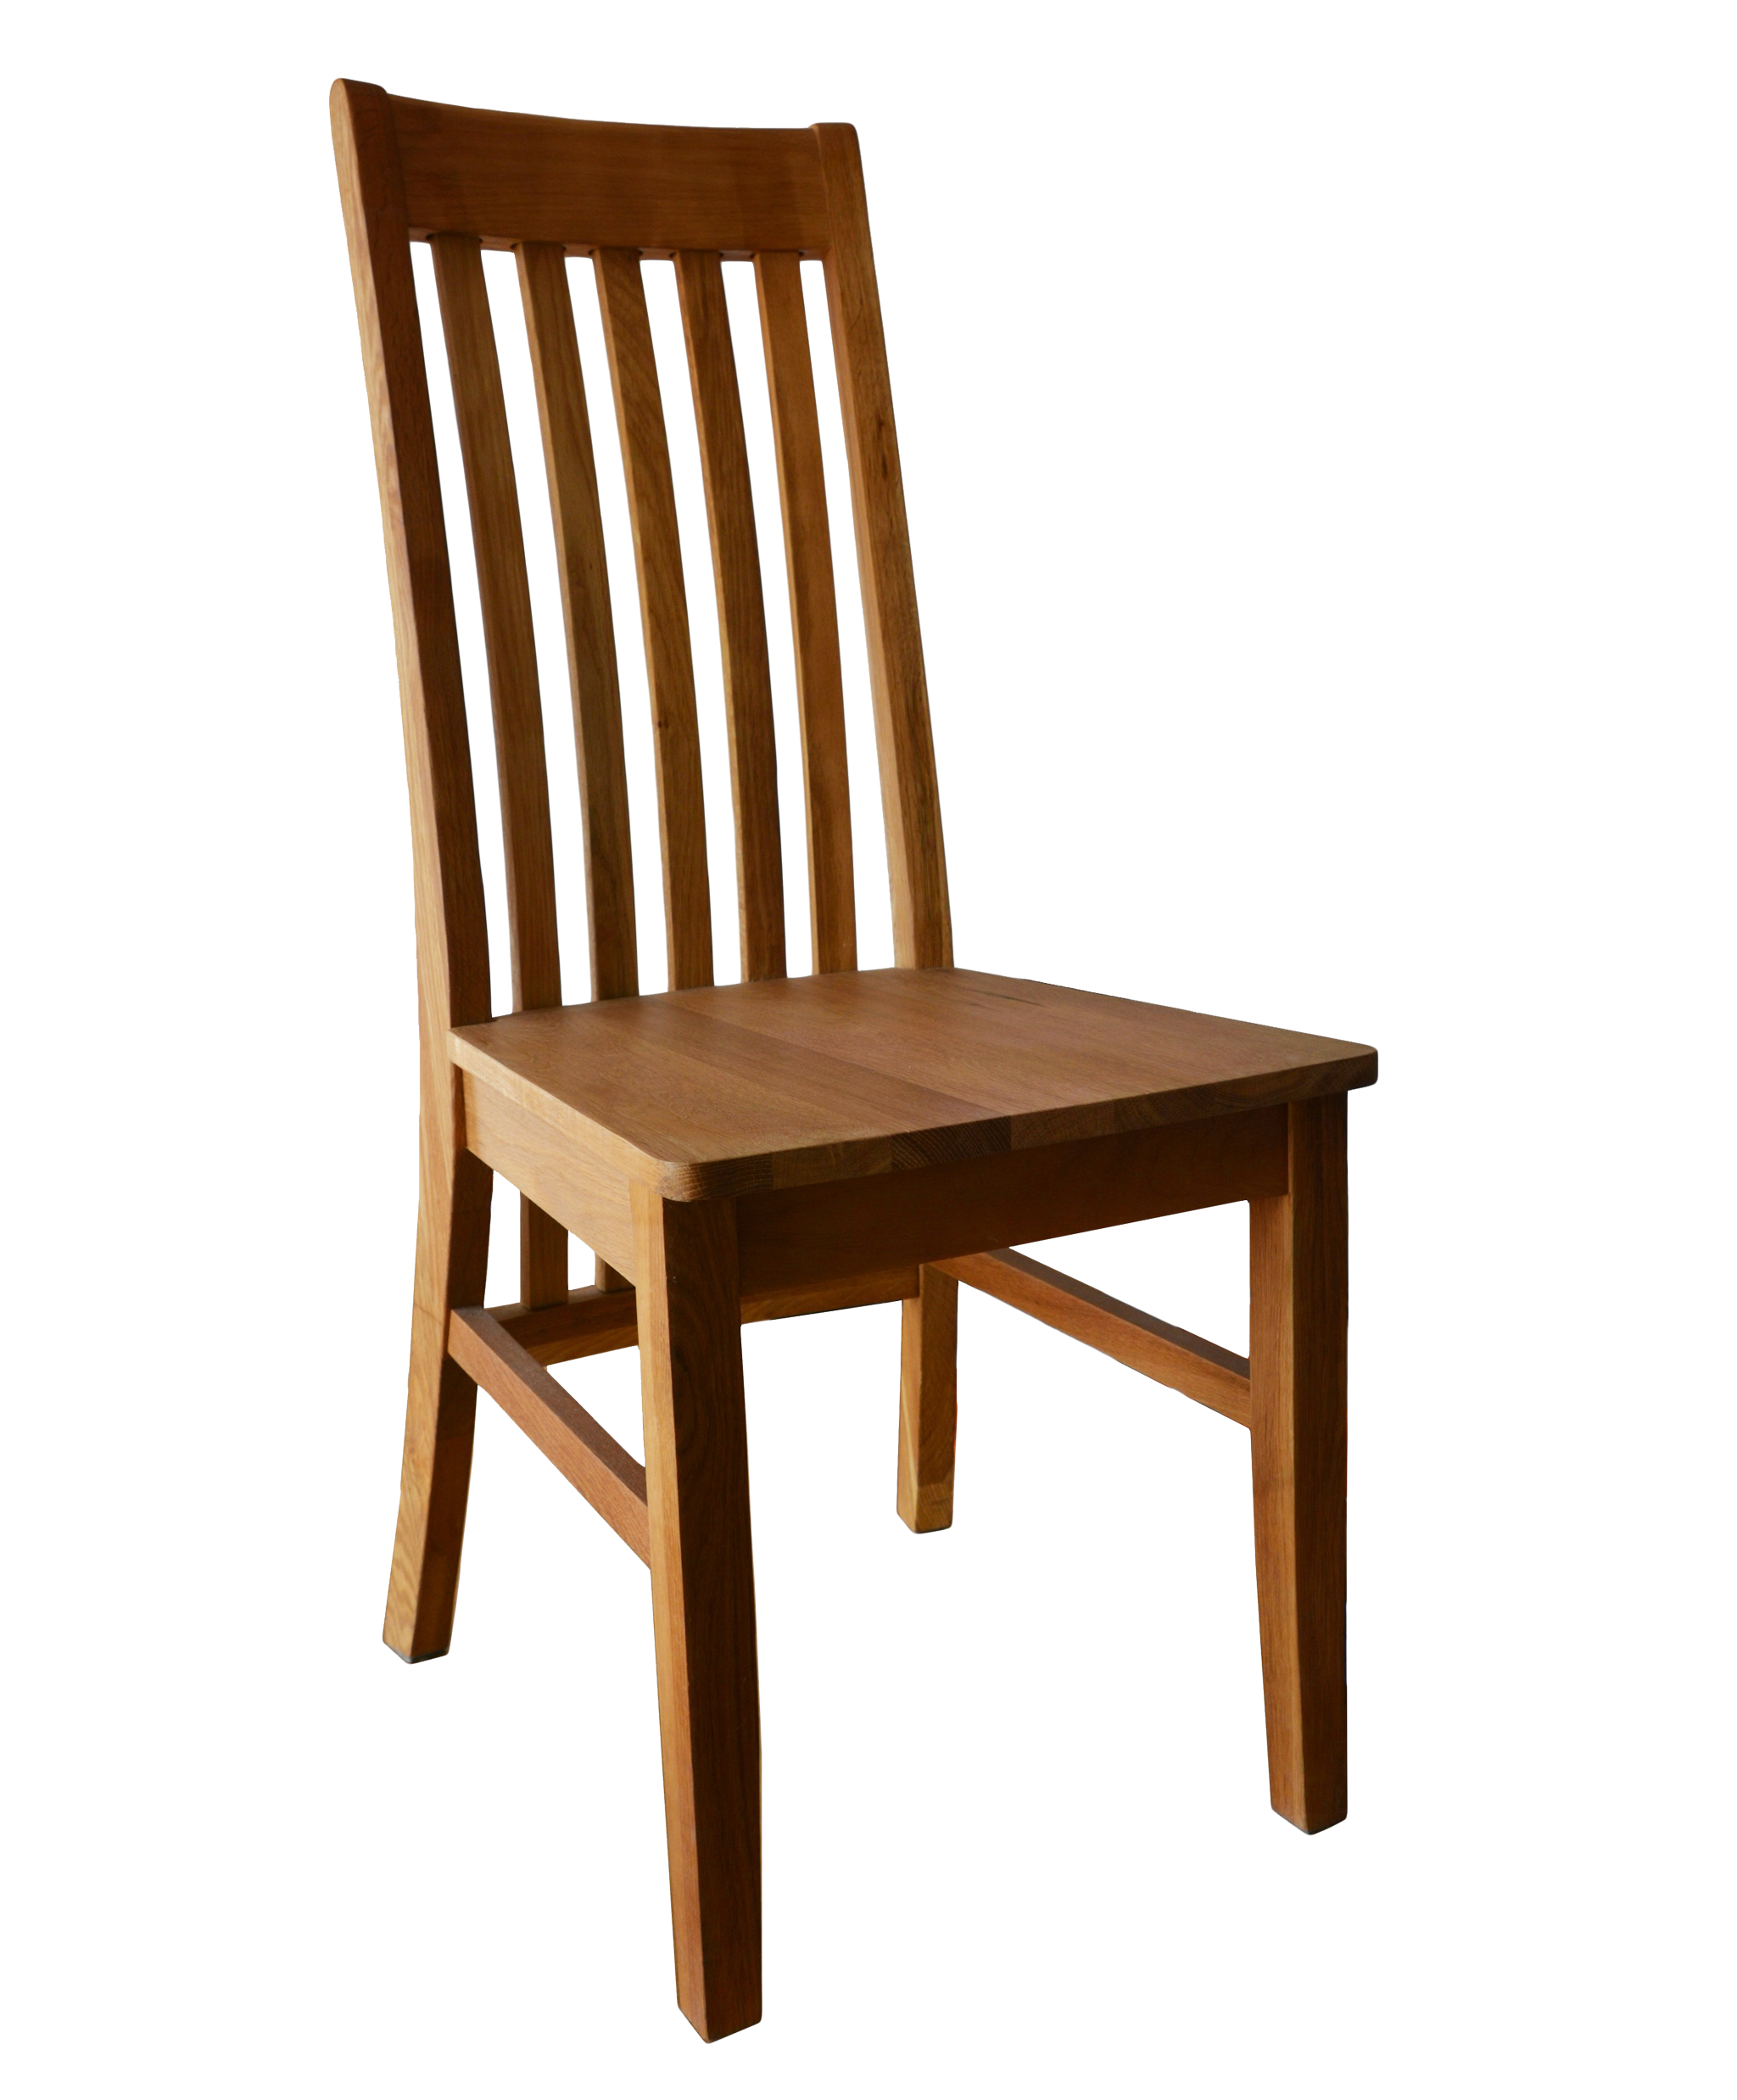 wooden chair png transparent image pngpix #13209